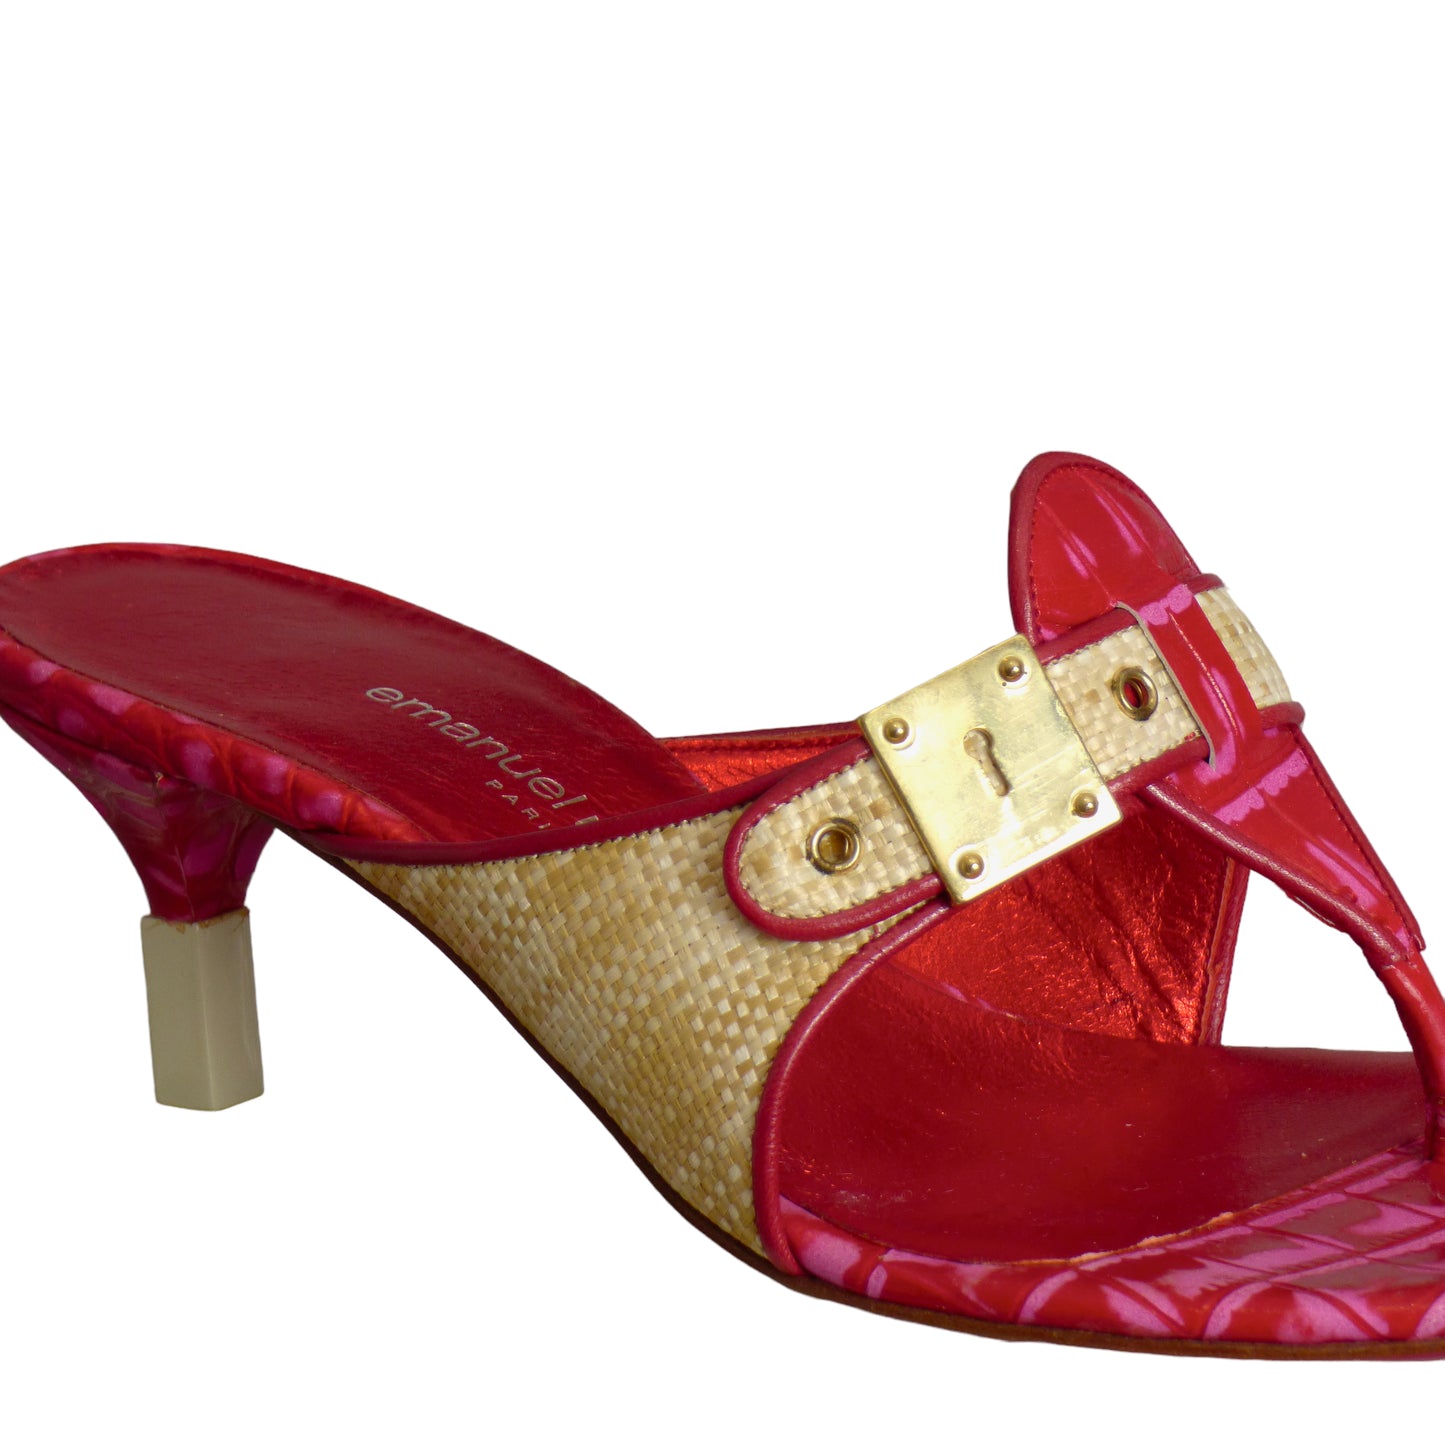 EMANUEL UNGARO- Straw & Leather Buckle Sandals, Size 6M